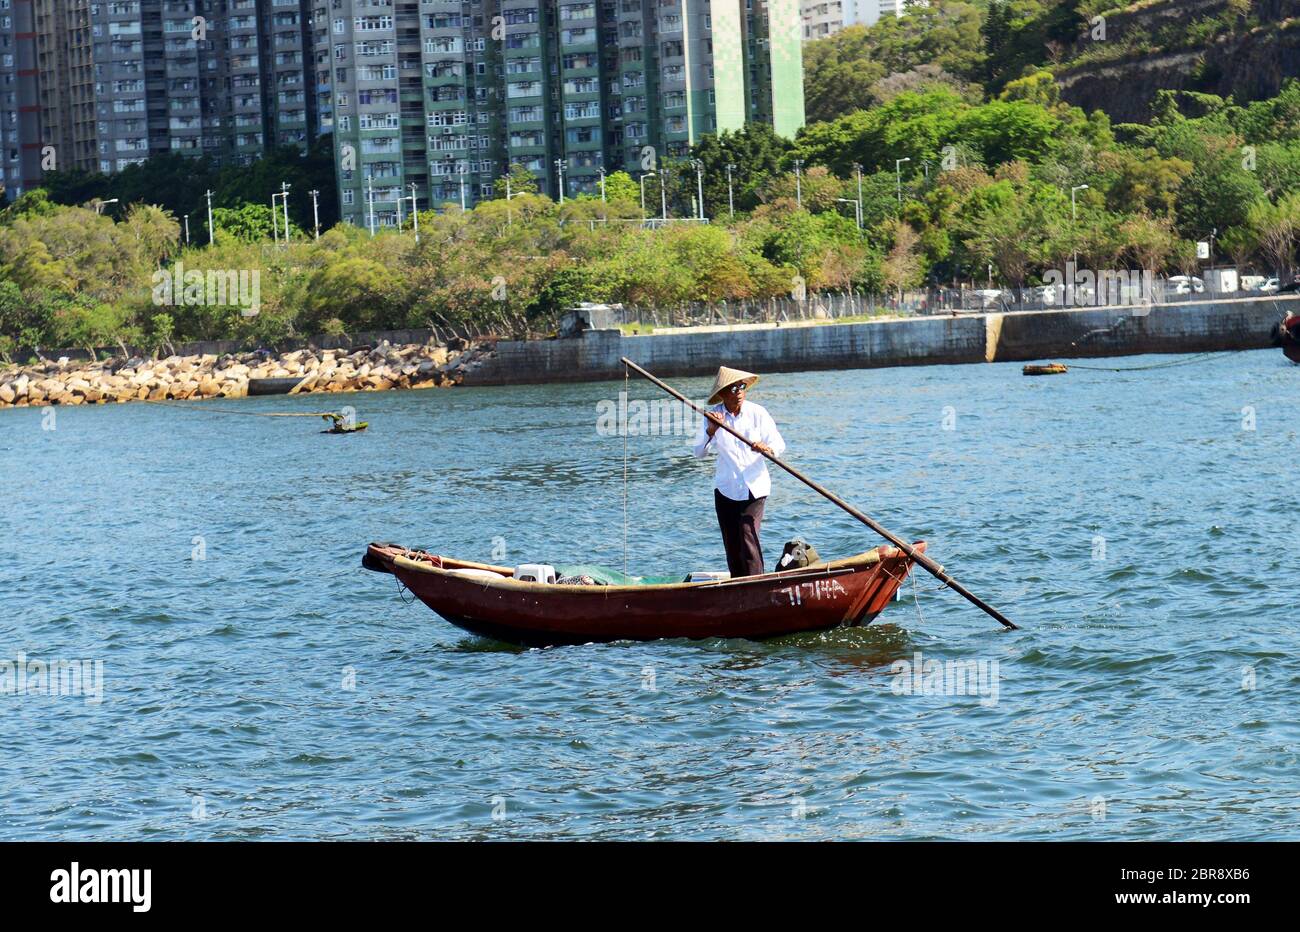 A fisherman fishing in the Aberdeen harbour in Hong Kong. Stock Photo